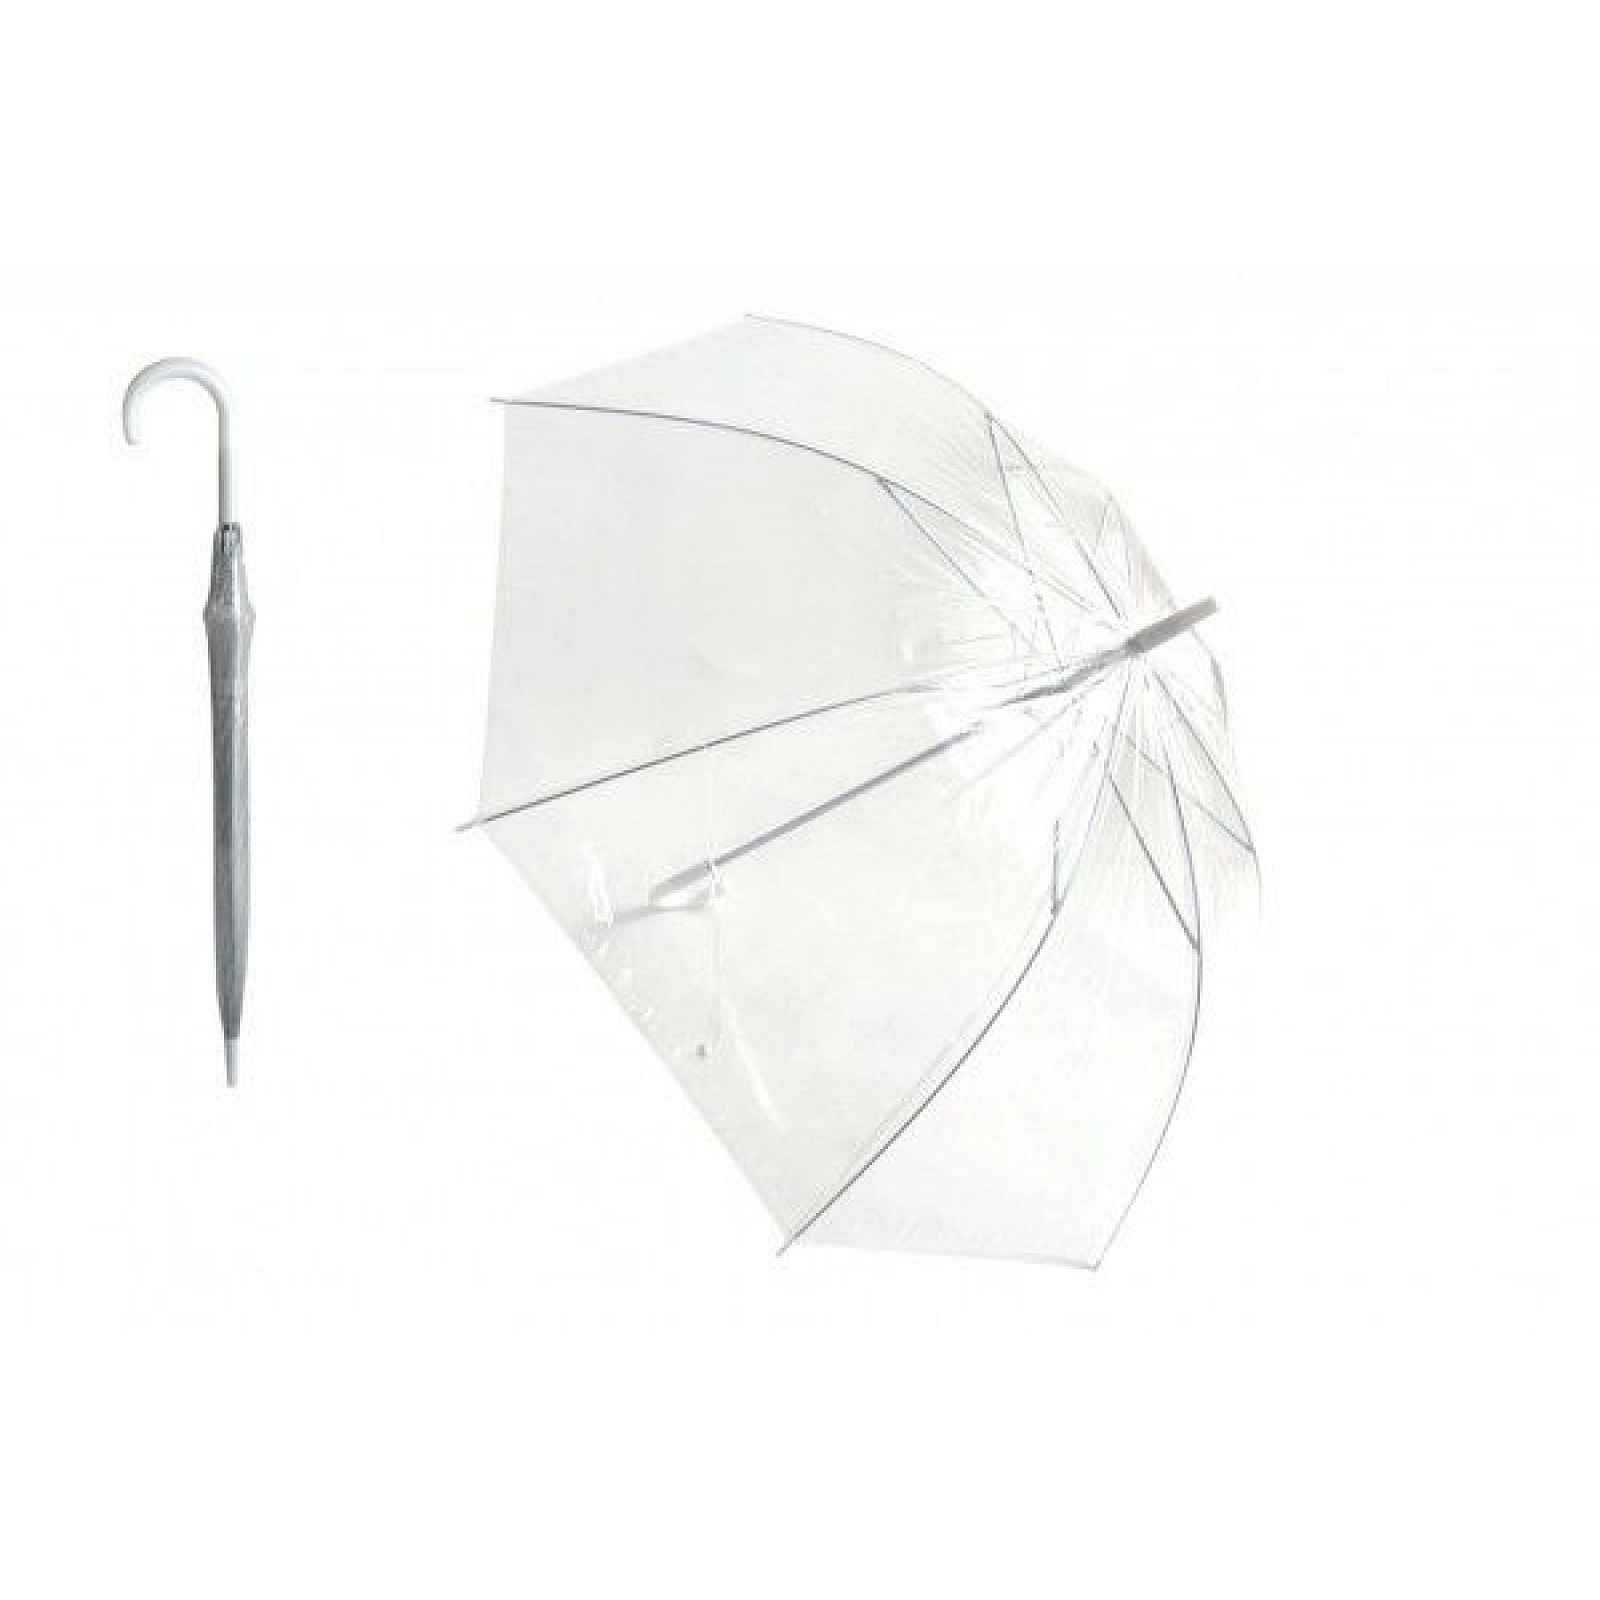 Deštník průhledný bílý plast/kov 82cm v sáčku